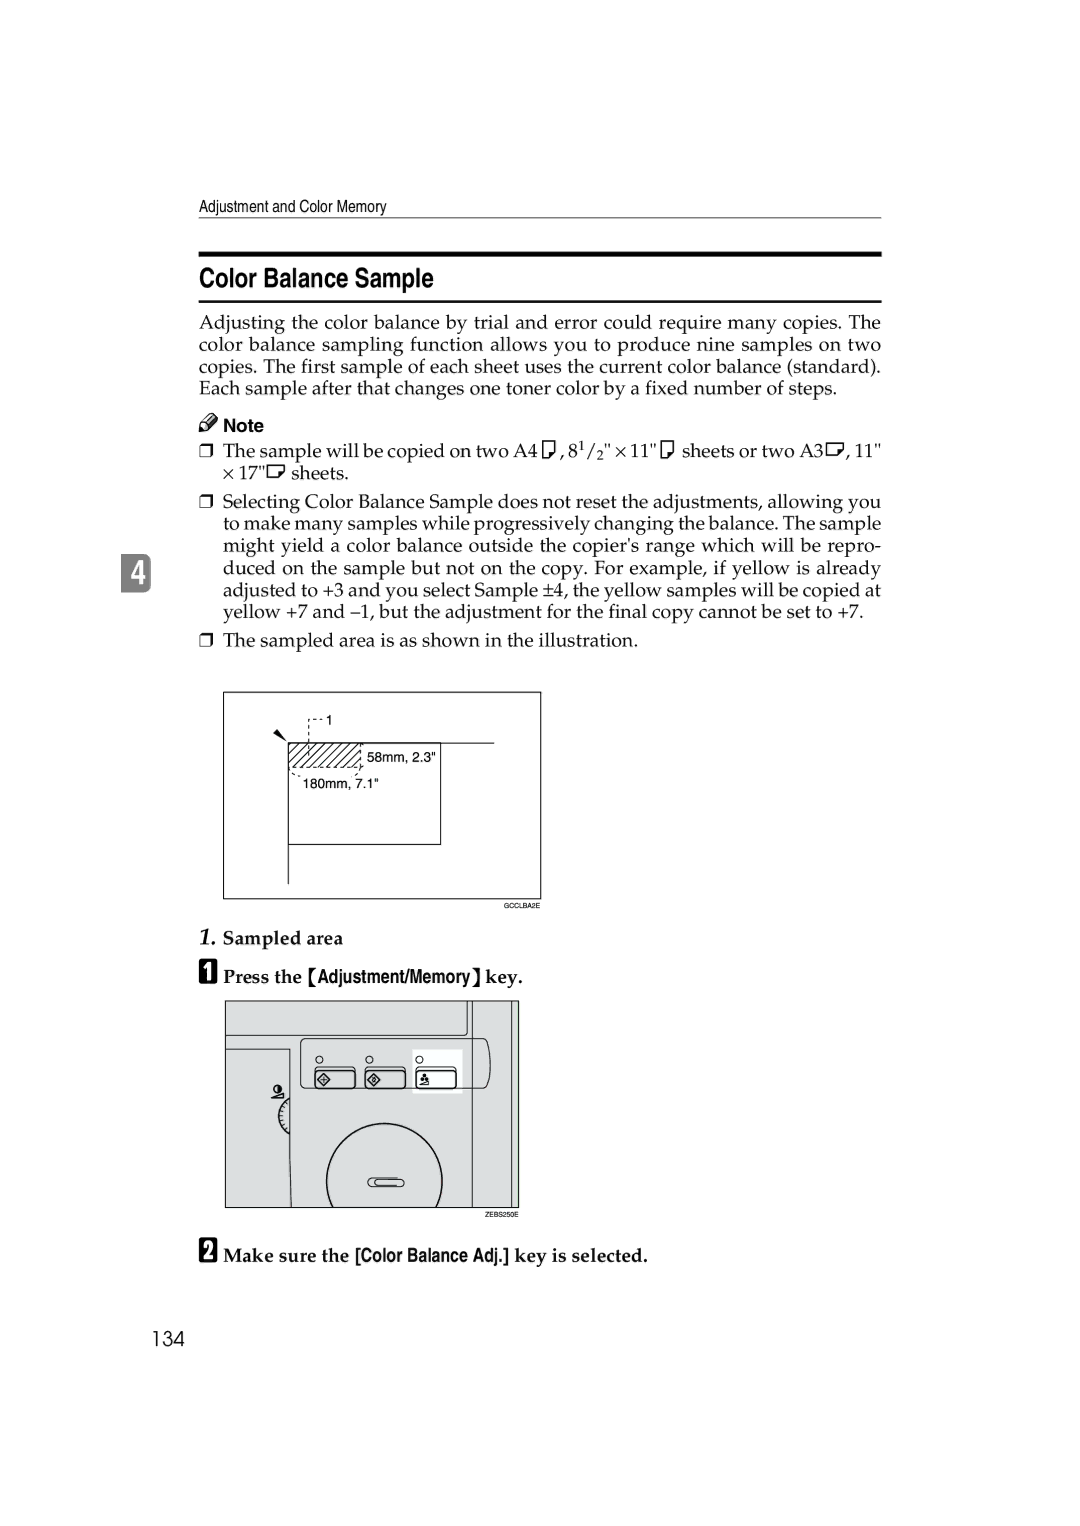 Ricoh 6513 manual Color Balance Sample, 134, Sampled area, Make sure the Color Balance Adj. key is selected 